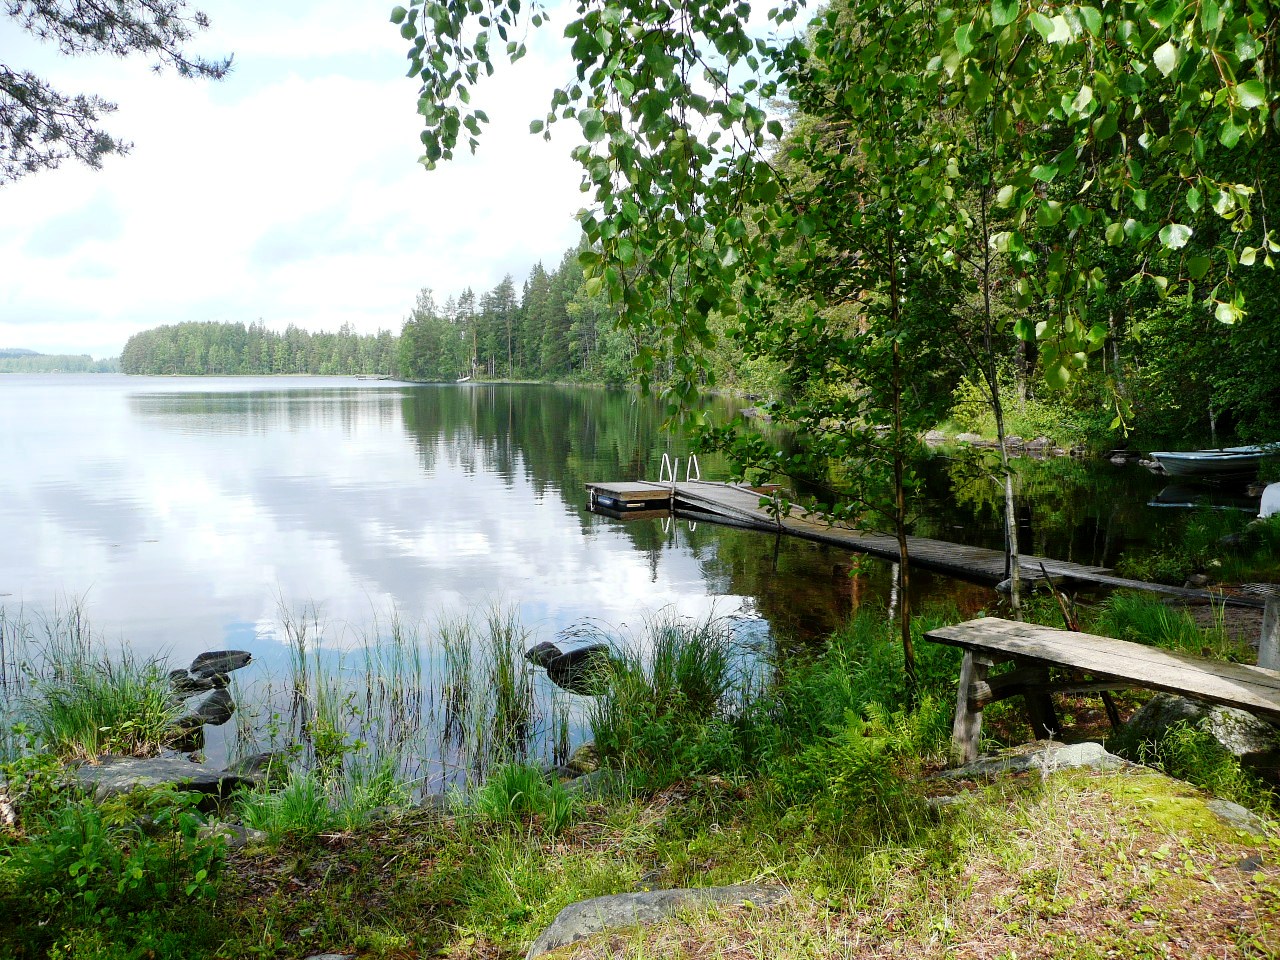 Finland – Travel destination regardless of season